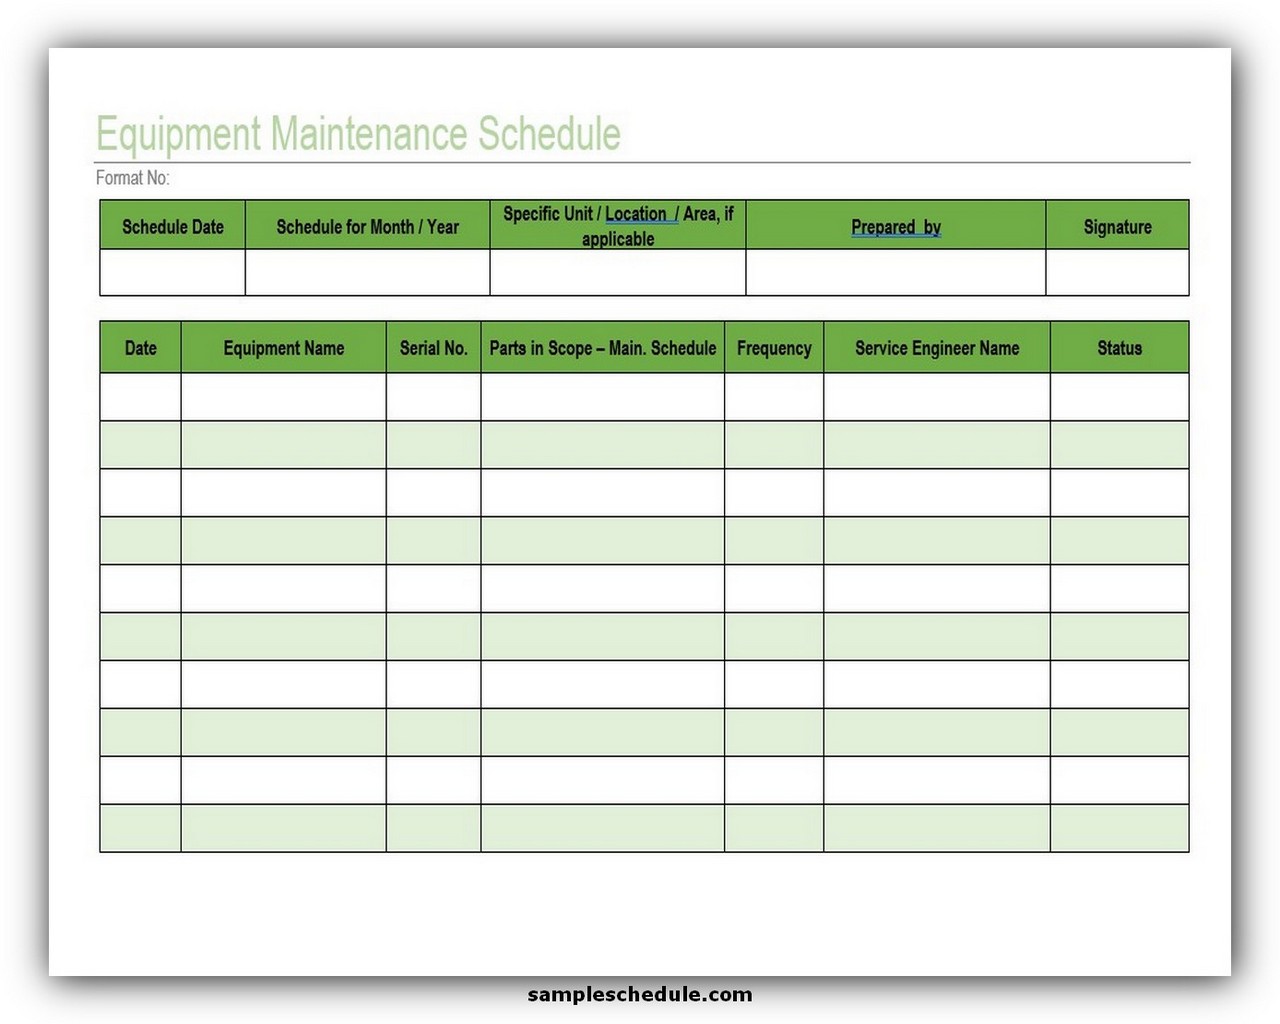 5-free-equipment-maintenance-schedule-template-excel-sample-schedule